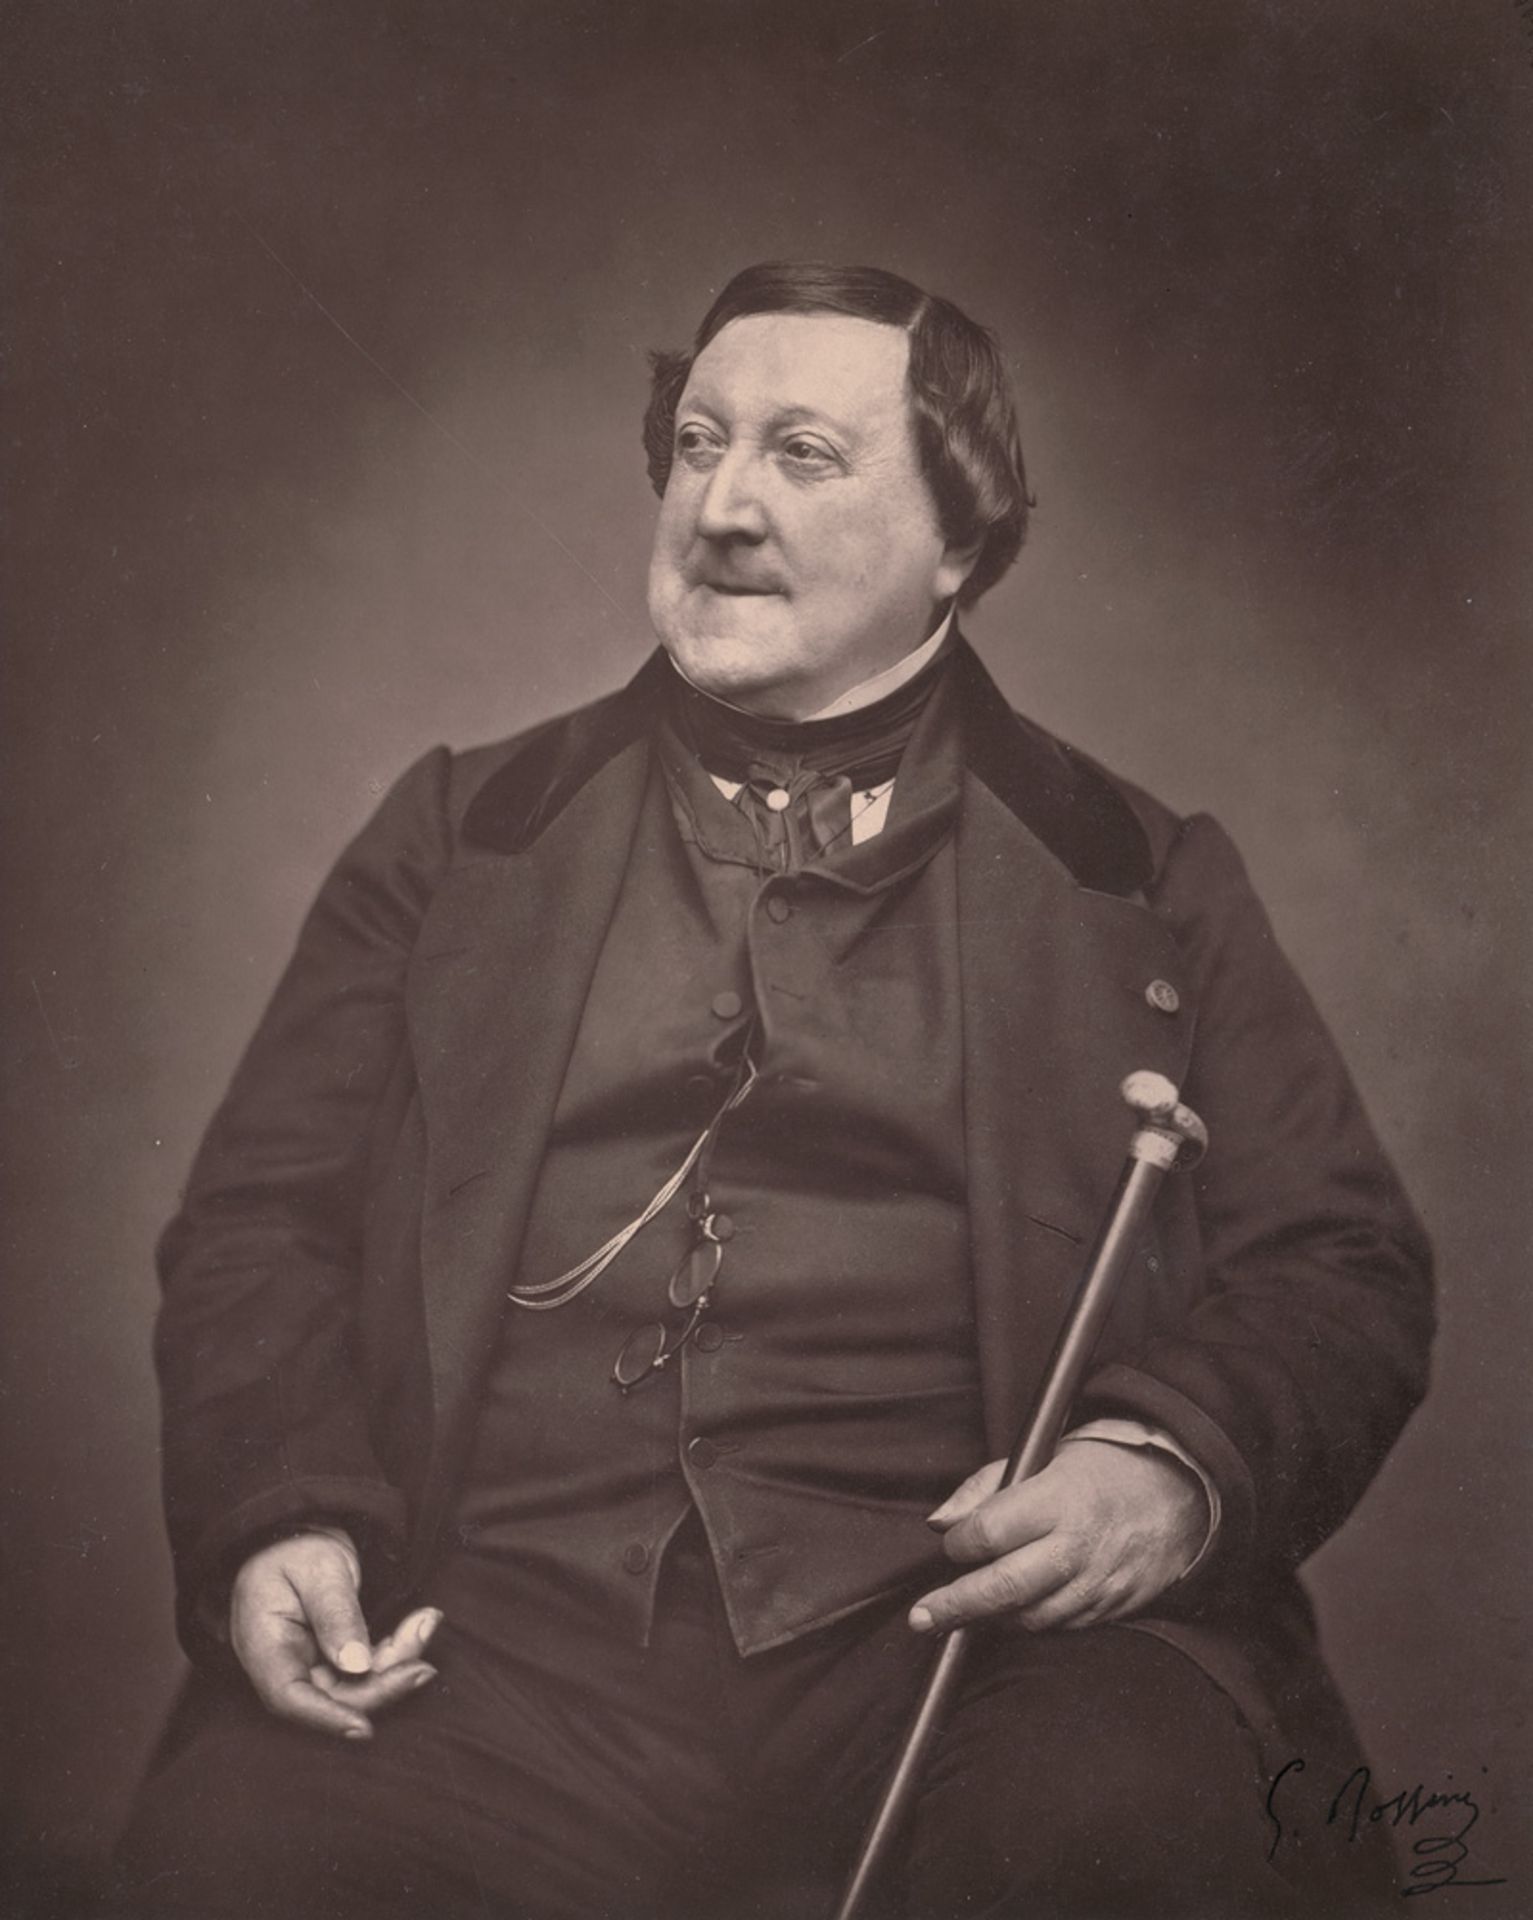 Carjat, Étienne: Portrait of Gioachino Rossini